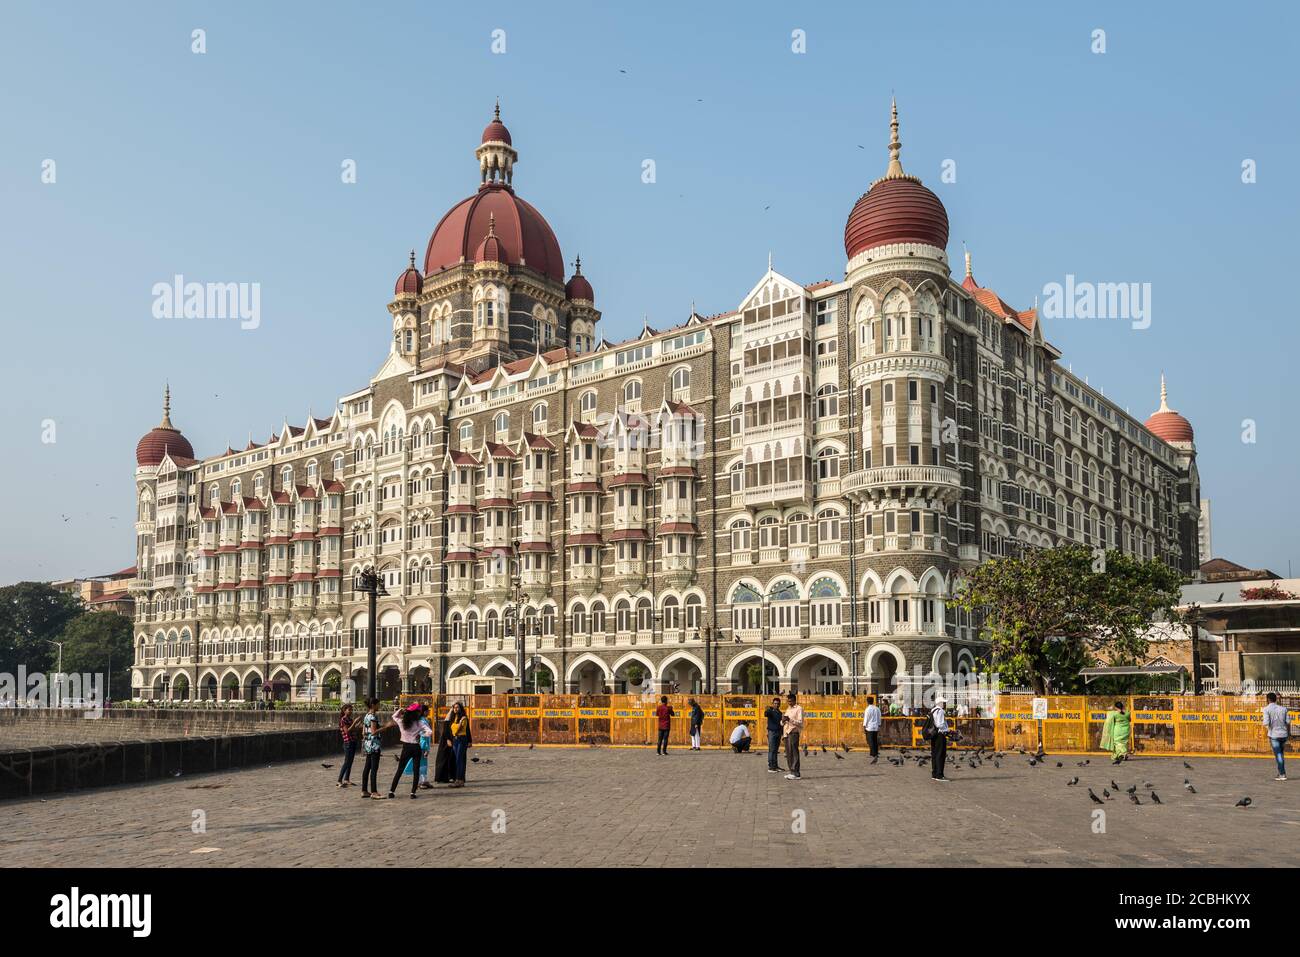 Mumbai, India - November 22, 2019: The Taj Mahal Palace Hotel located near Gateway of India and is the flagship property of Taj Hotels, Resorts & Pala Stock Photo